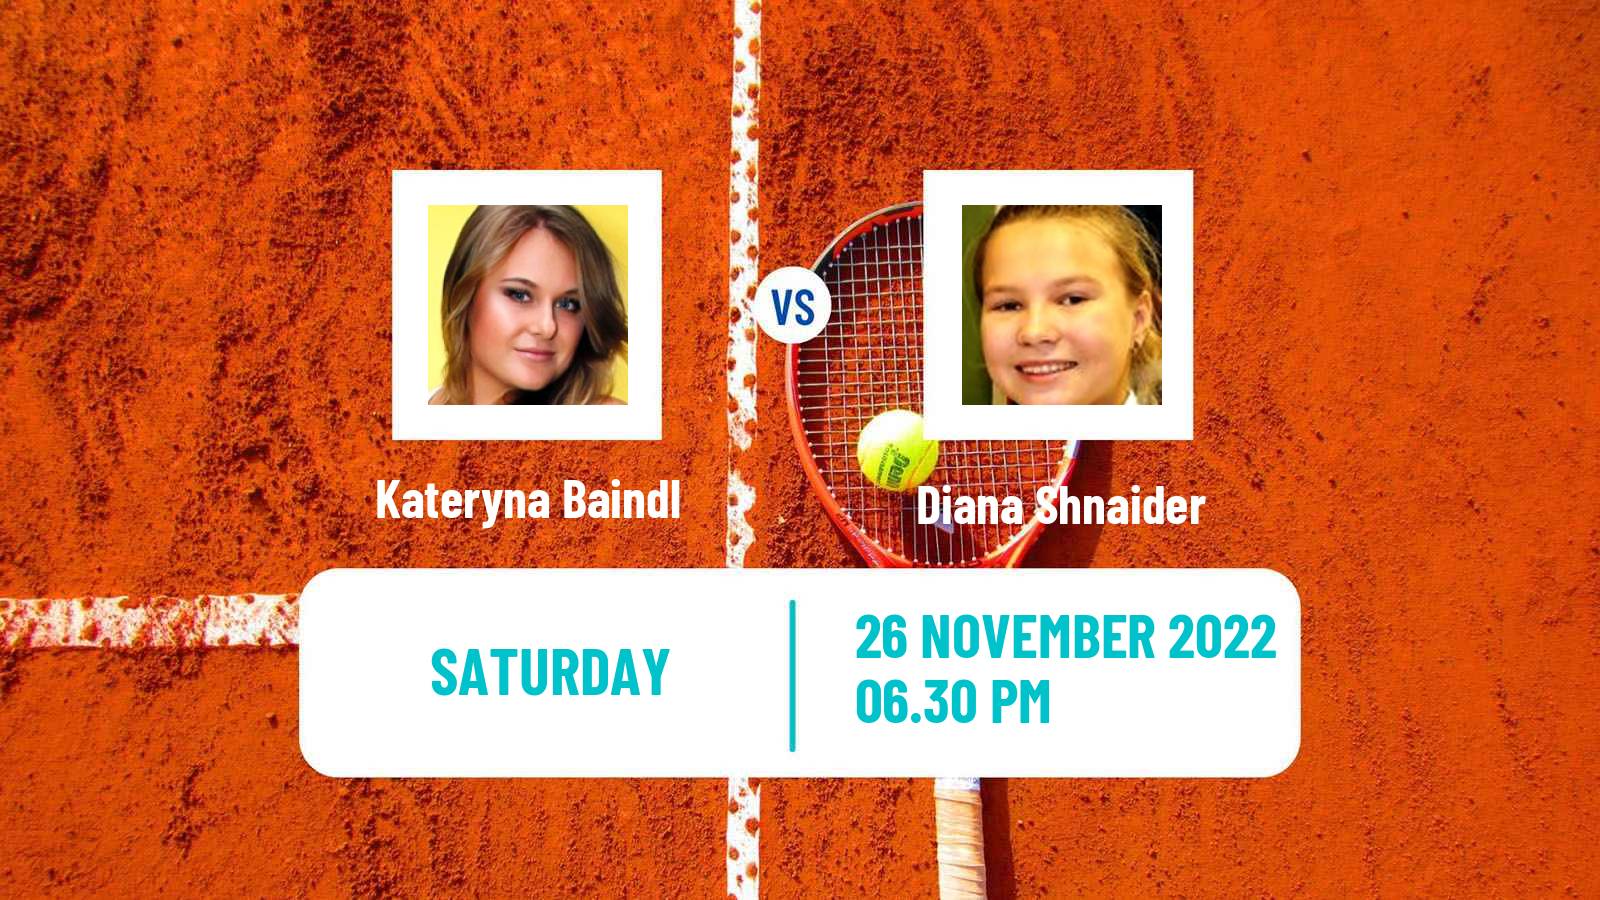 Tennis ATP Challenger Kateryna Baindl - Diana Shnaider